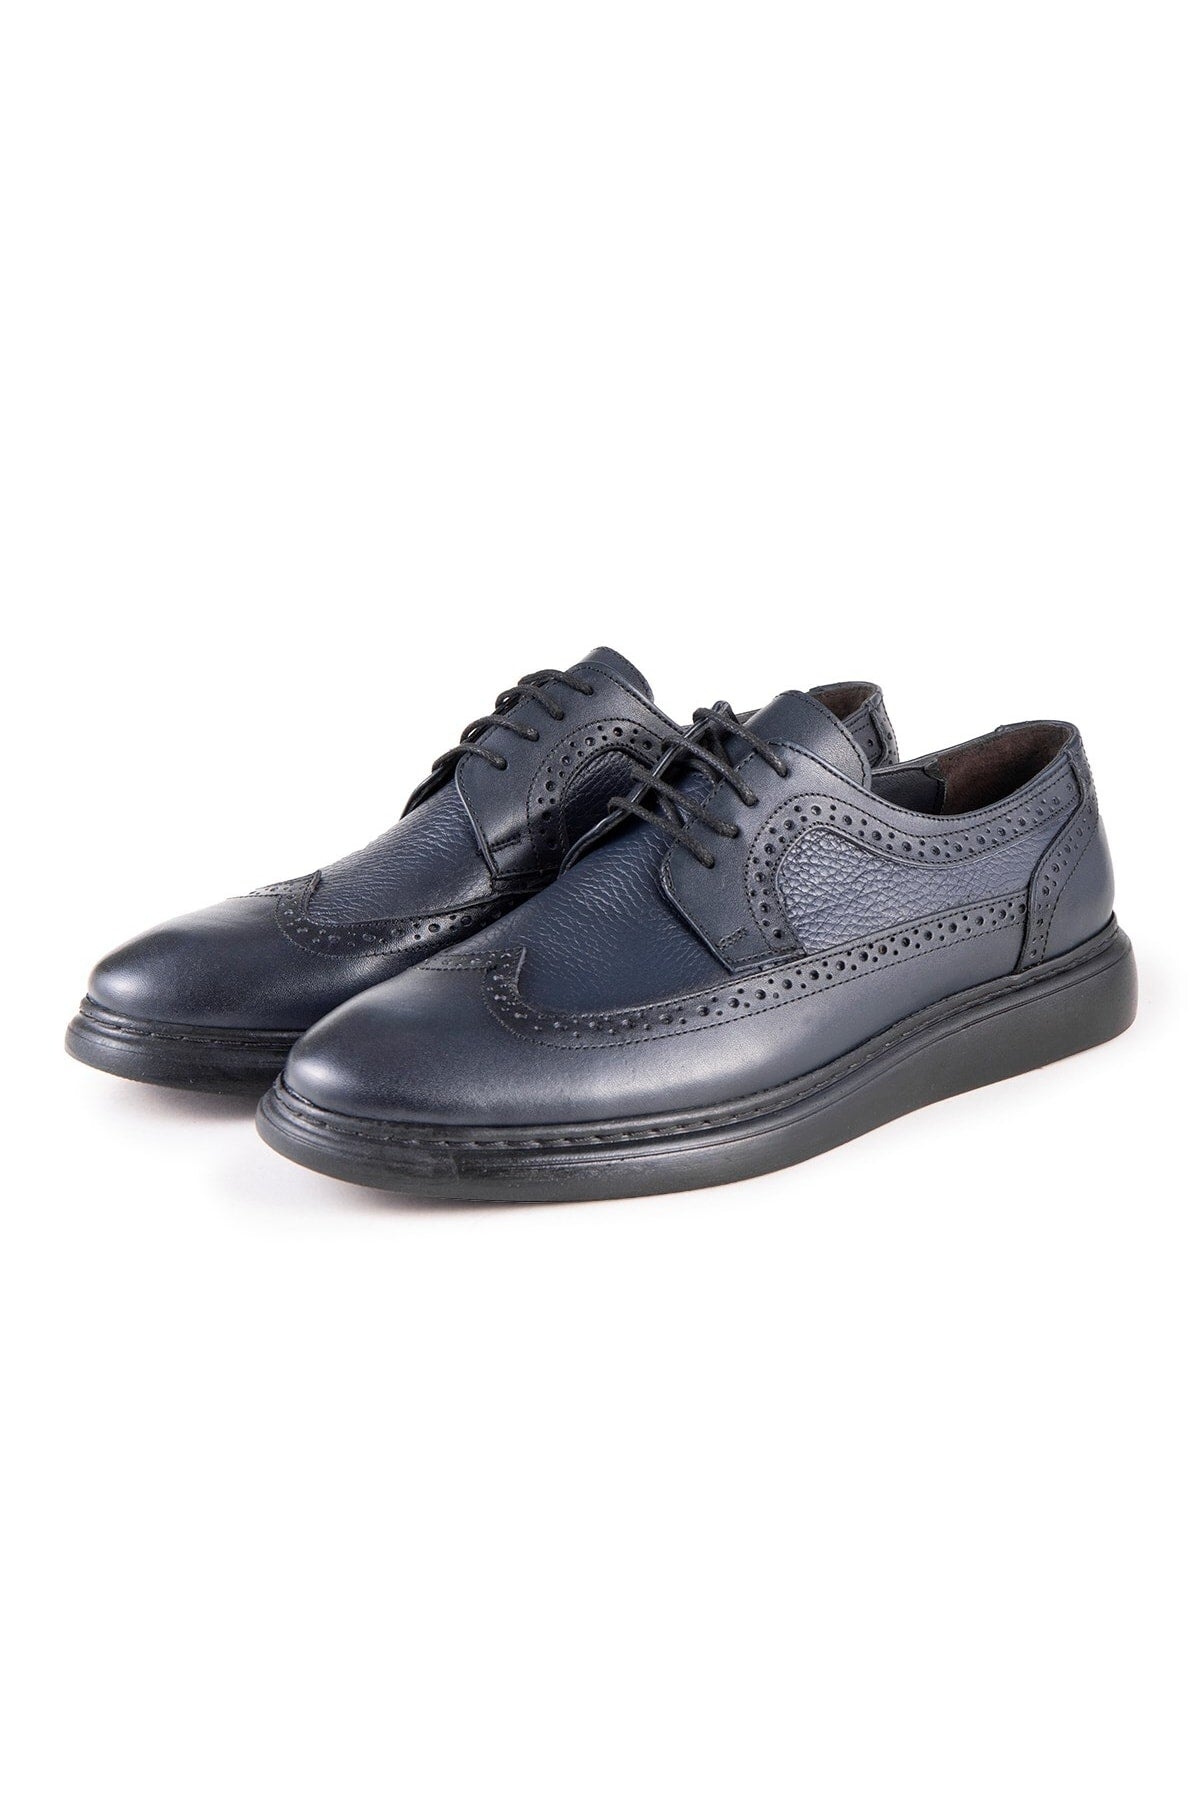 Lusso Genuine Leather Men's Casual Classic Shoes, Genuine Leather Classic Shoes, Derby Classic